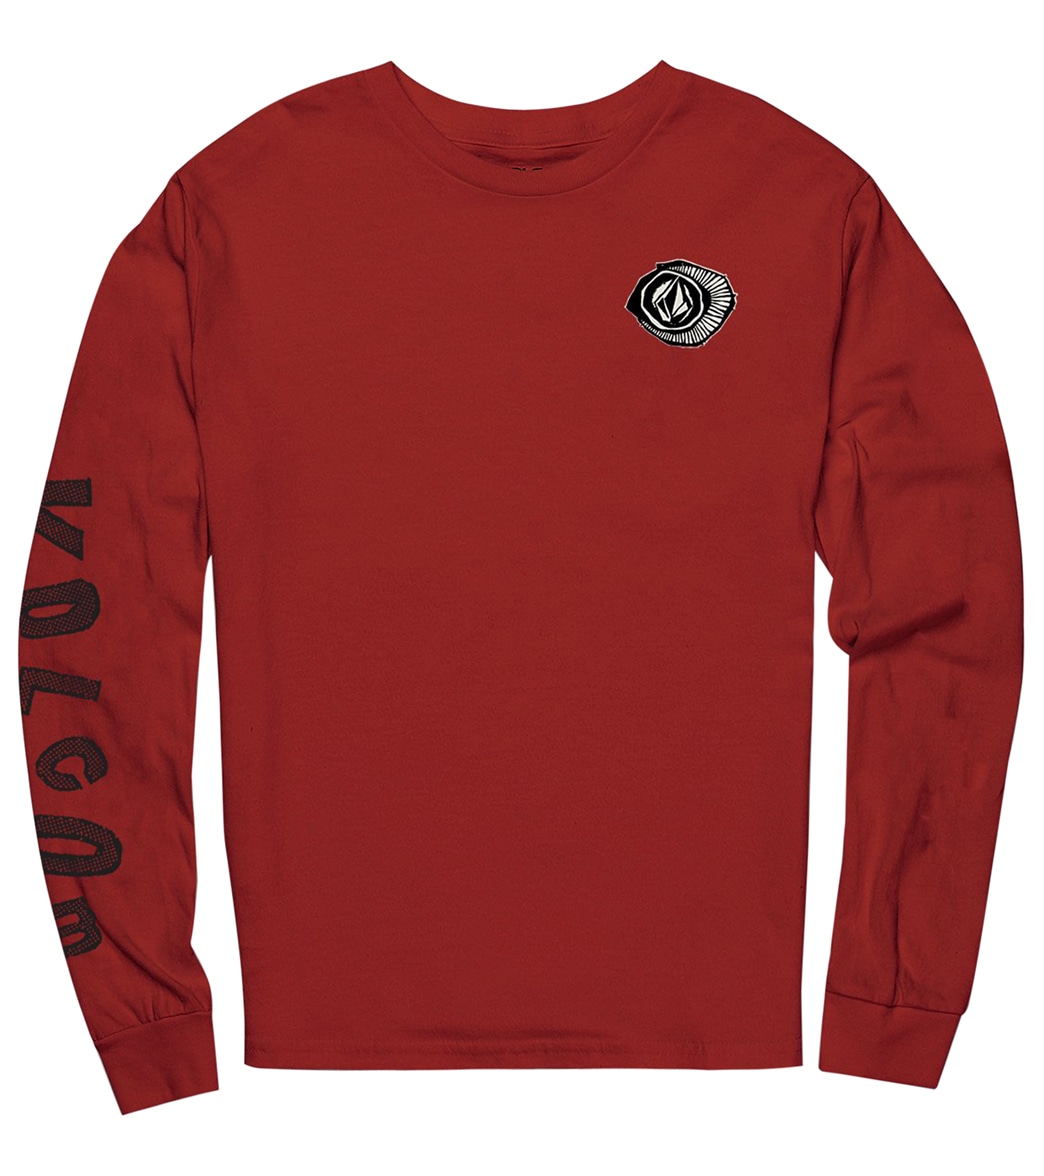 Volcom Boys' Sick 180 Long Sleeve T-Shirt - Ribbon Red 2T Cotton - Swimoutlet.com